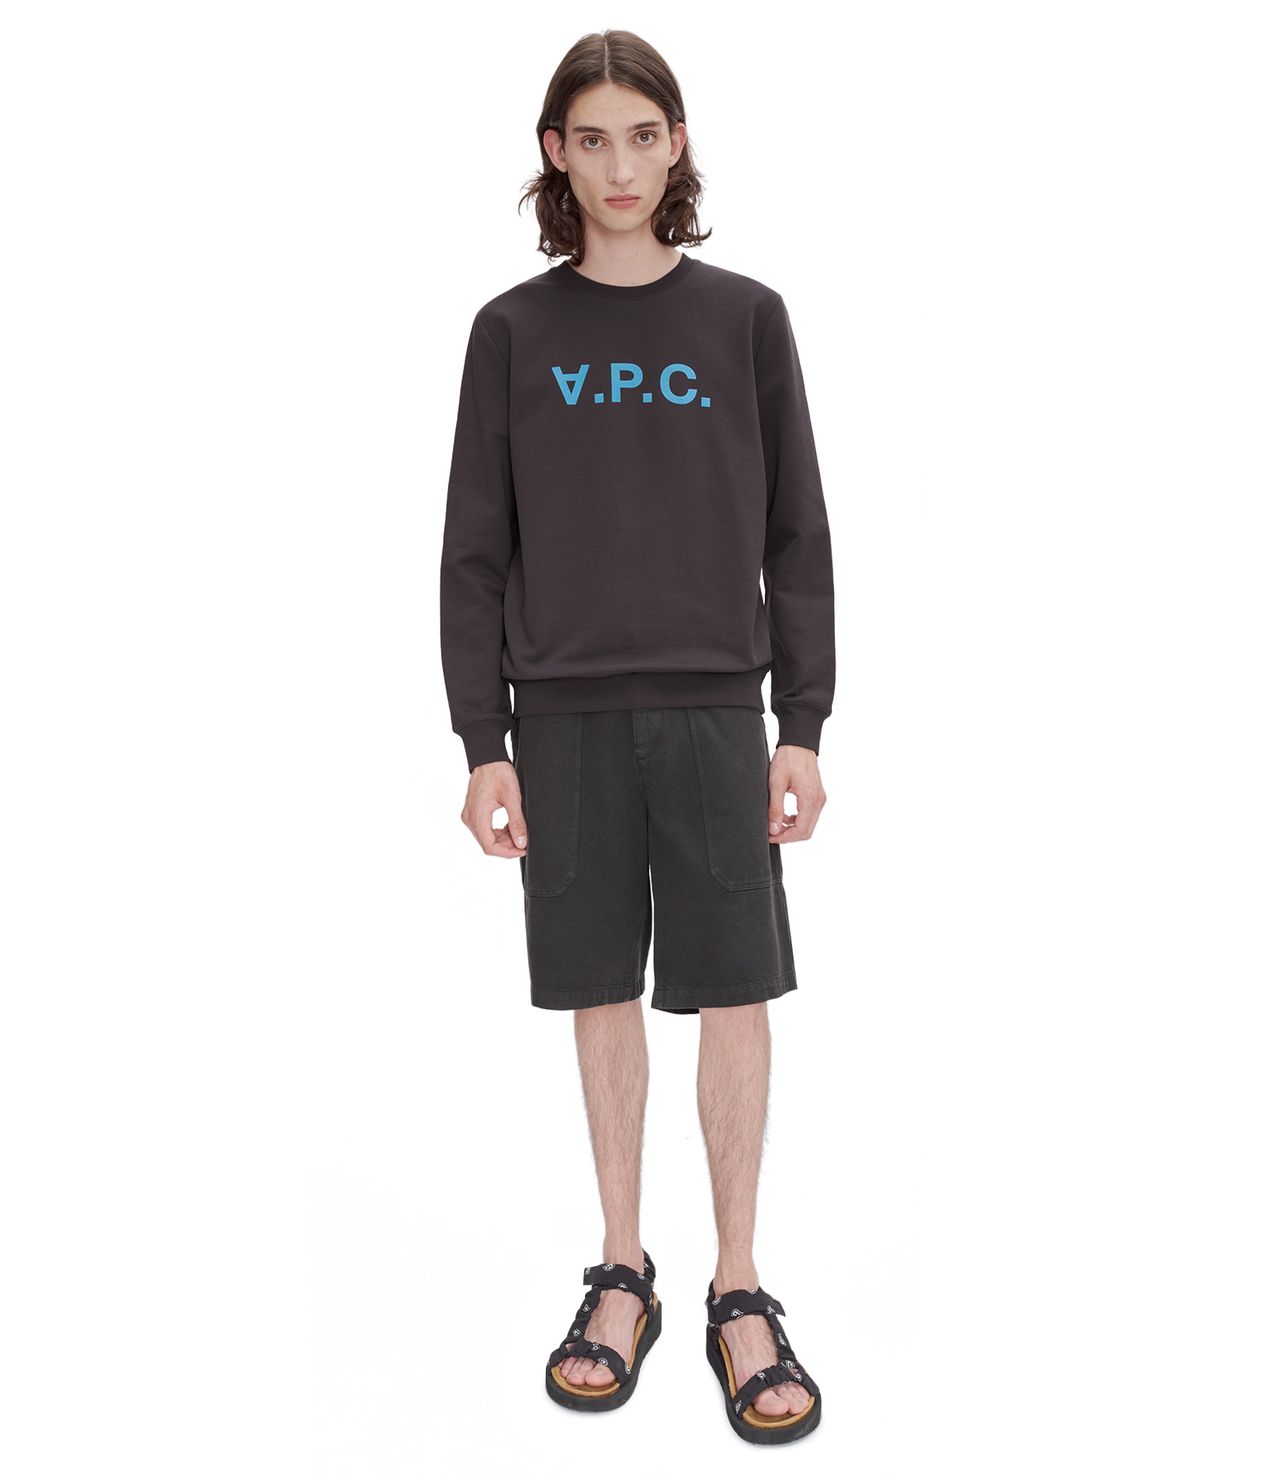 V.P.C. sweatshirt CHARCOAL GREY APC